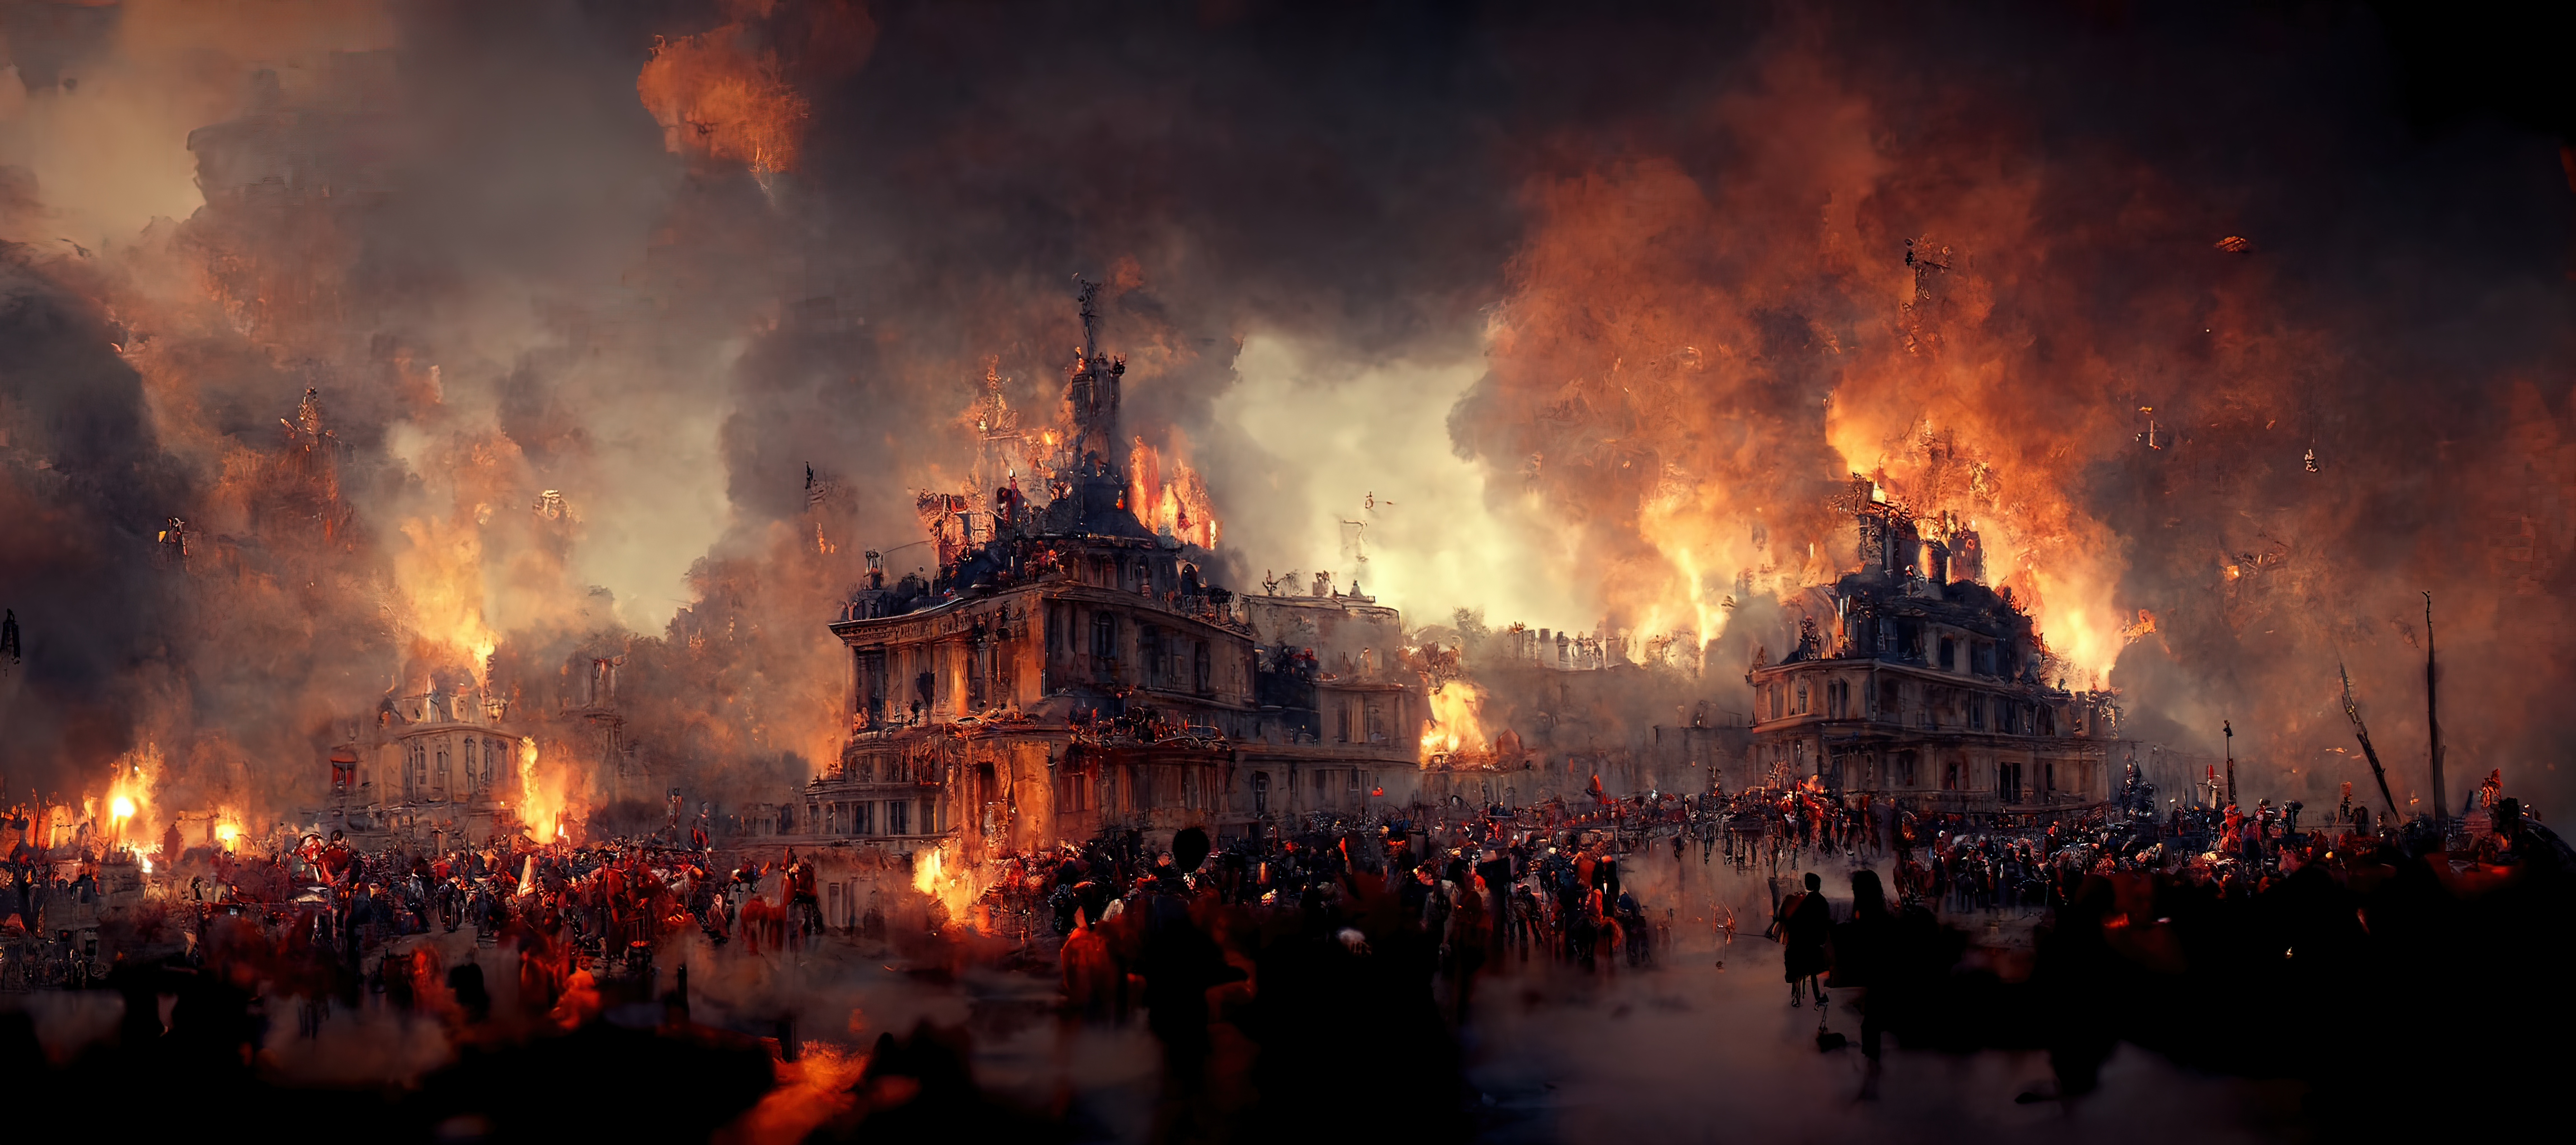 Crowds surround a burning mansion at night